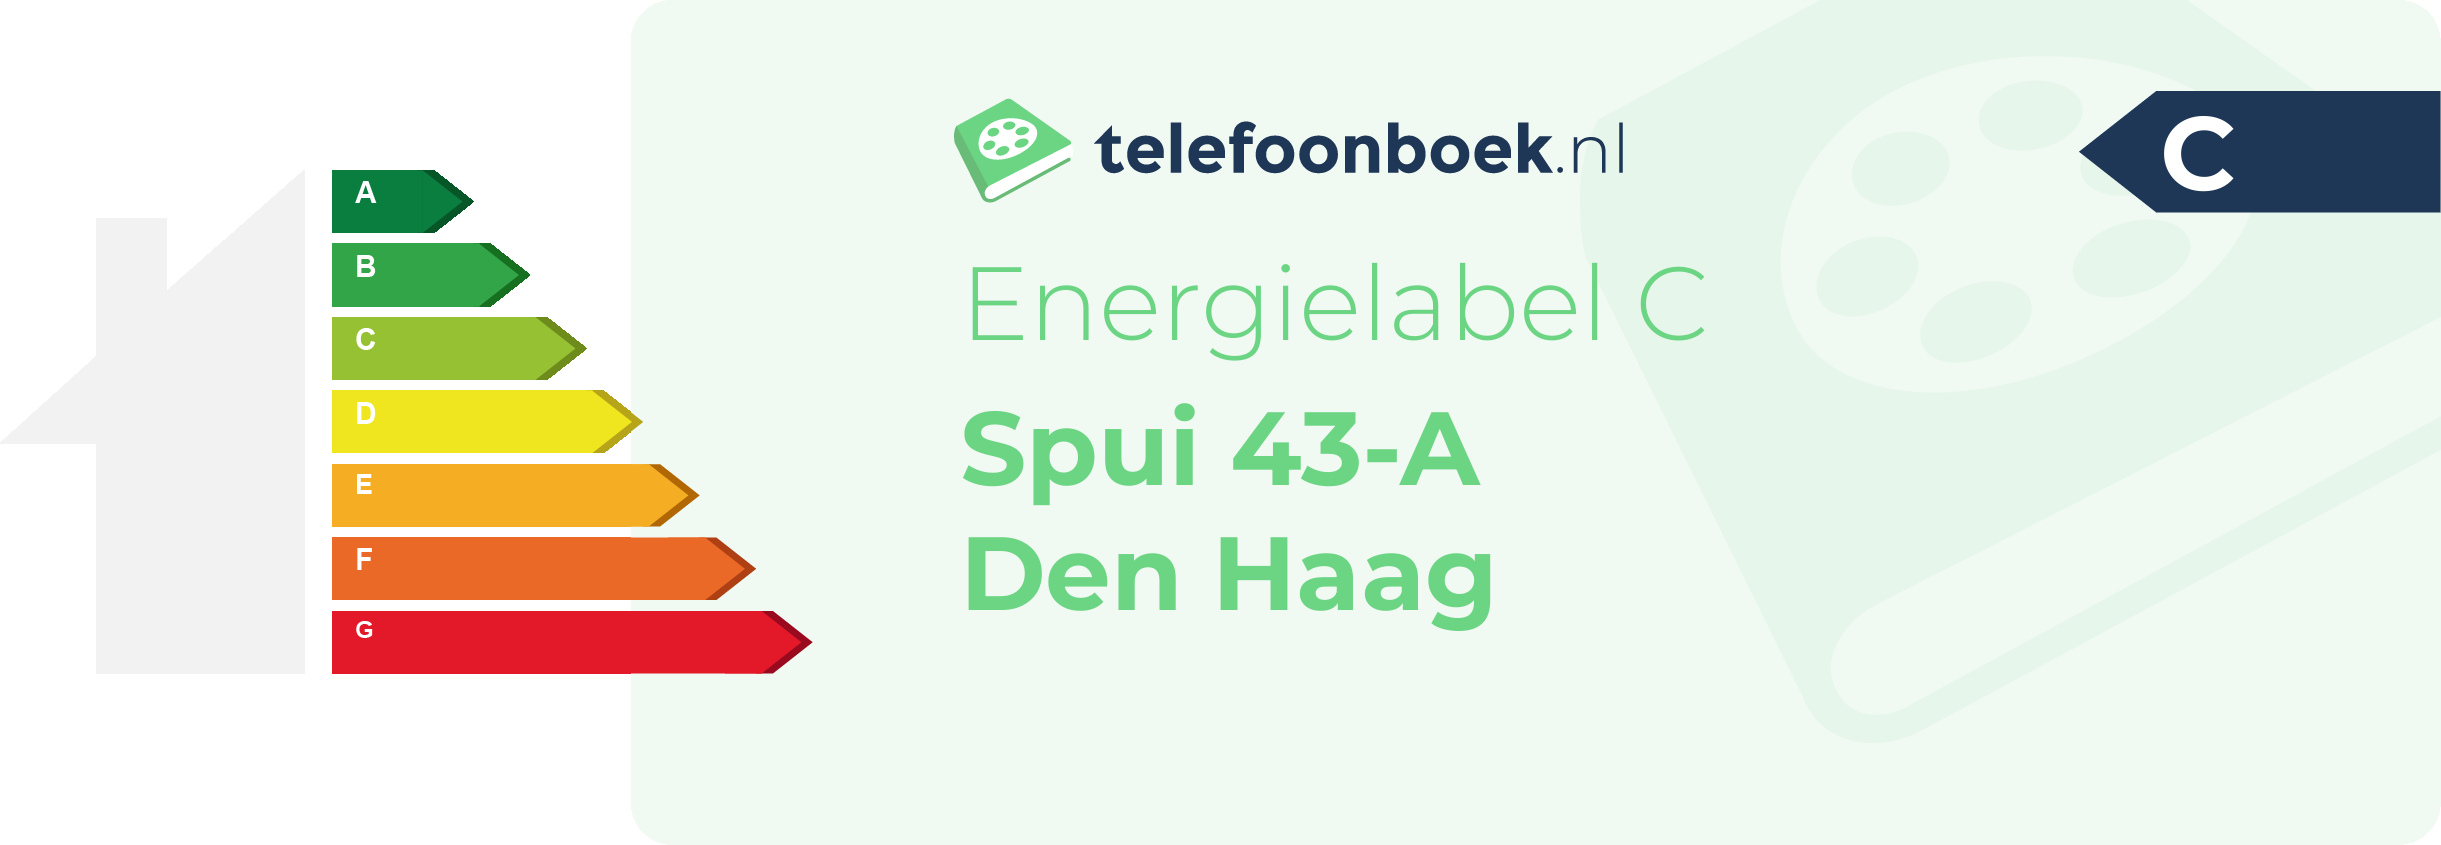 Energielabel Spui 43-A Den Haag